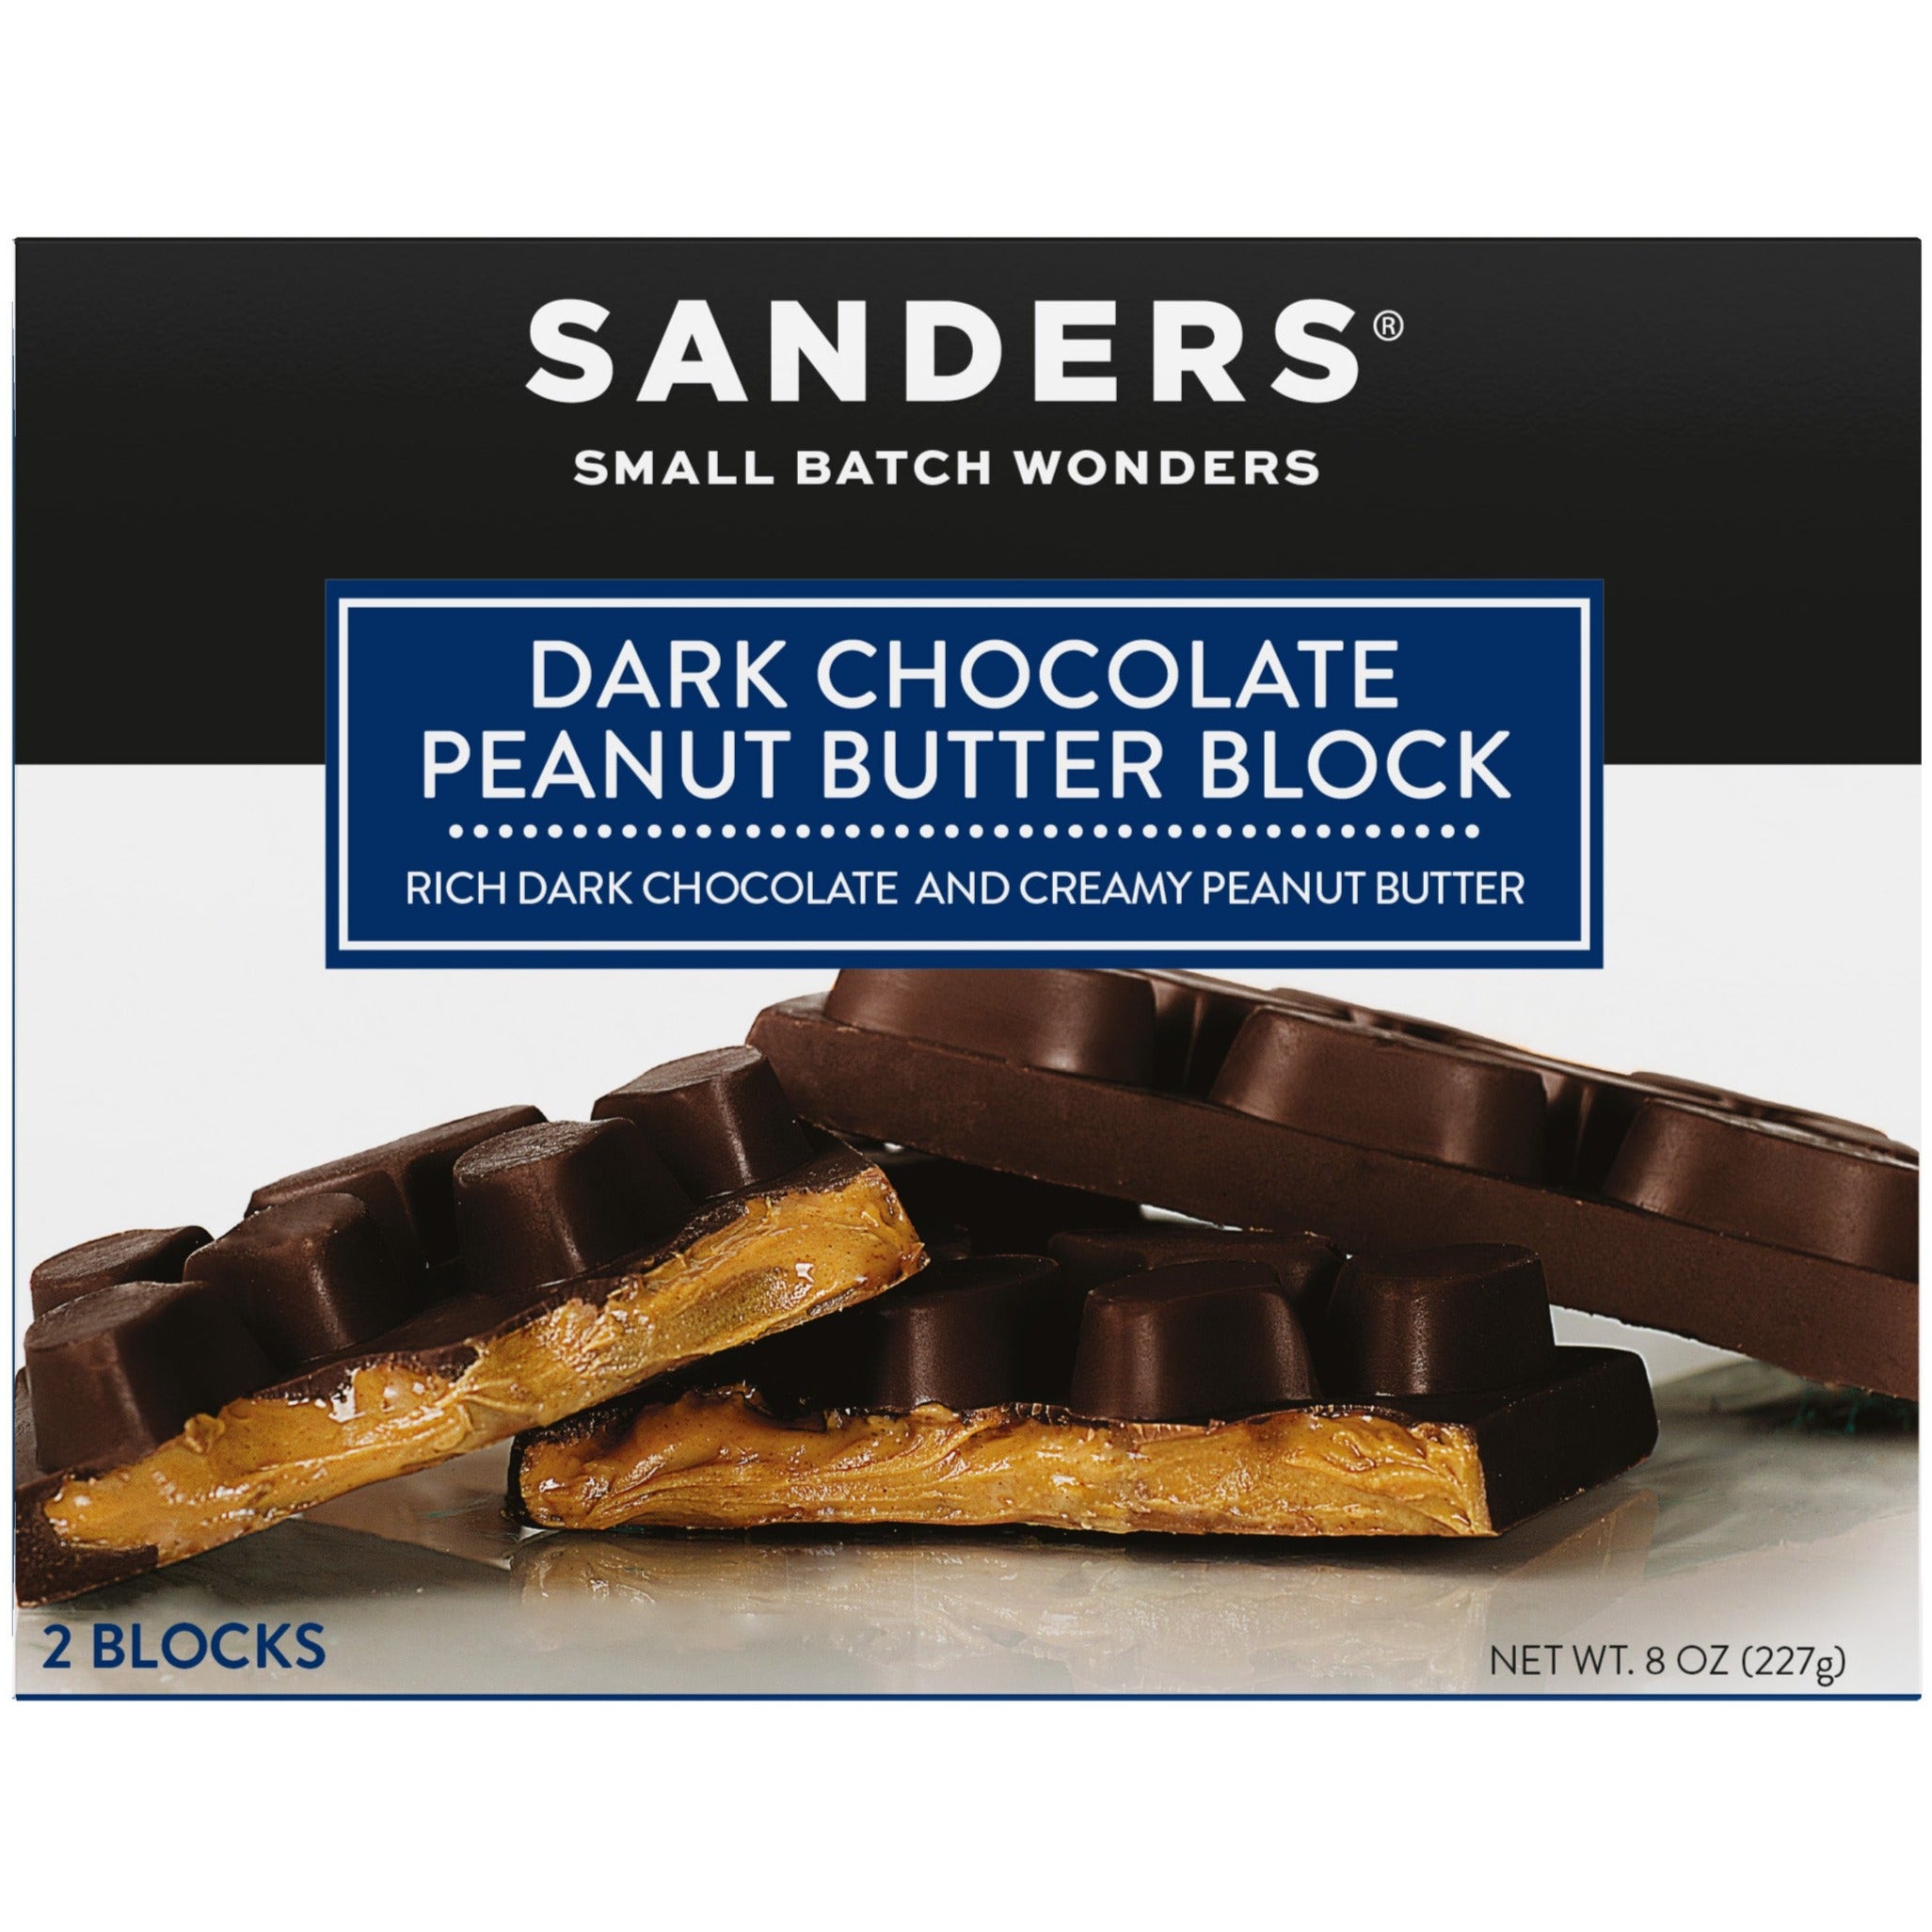 Dark Chocolate Peanut Butter Block 8 oz.